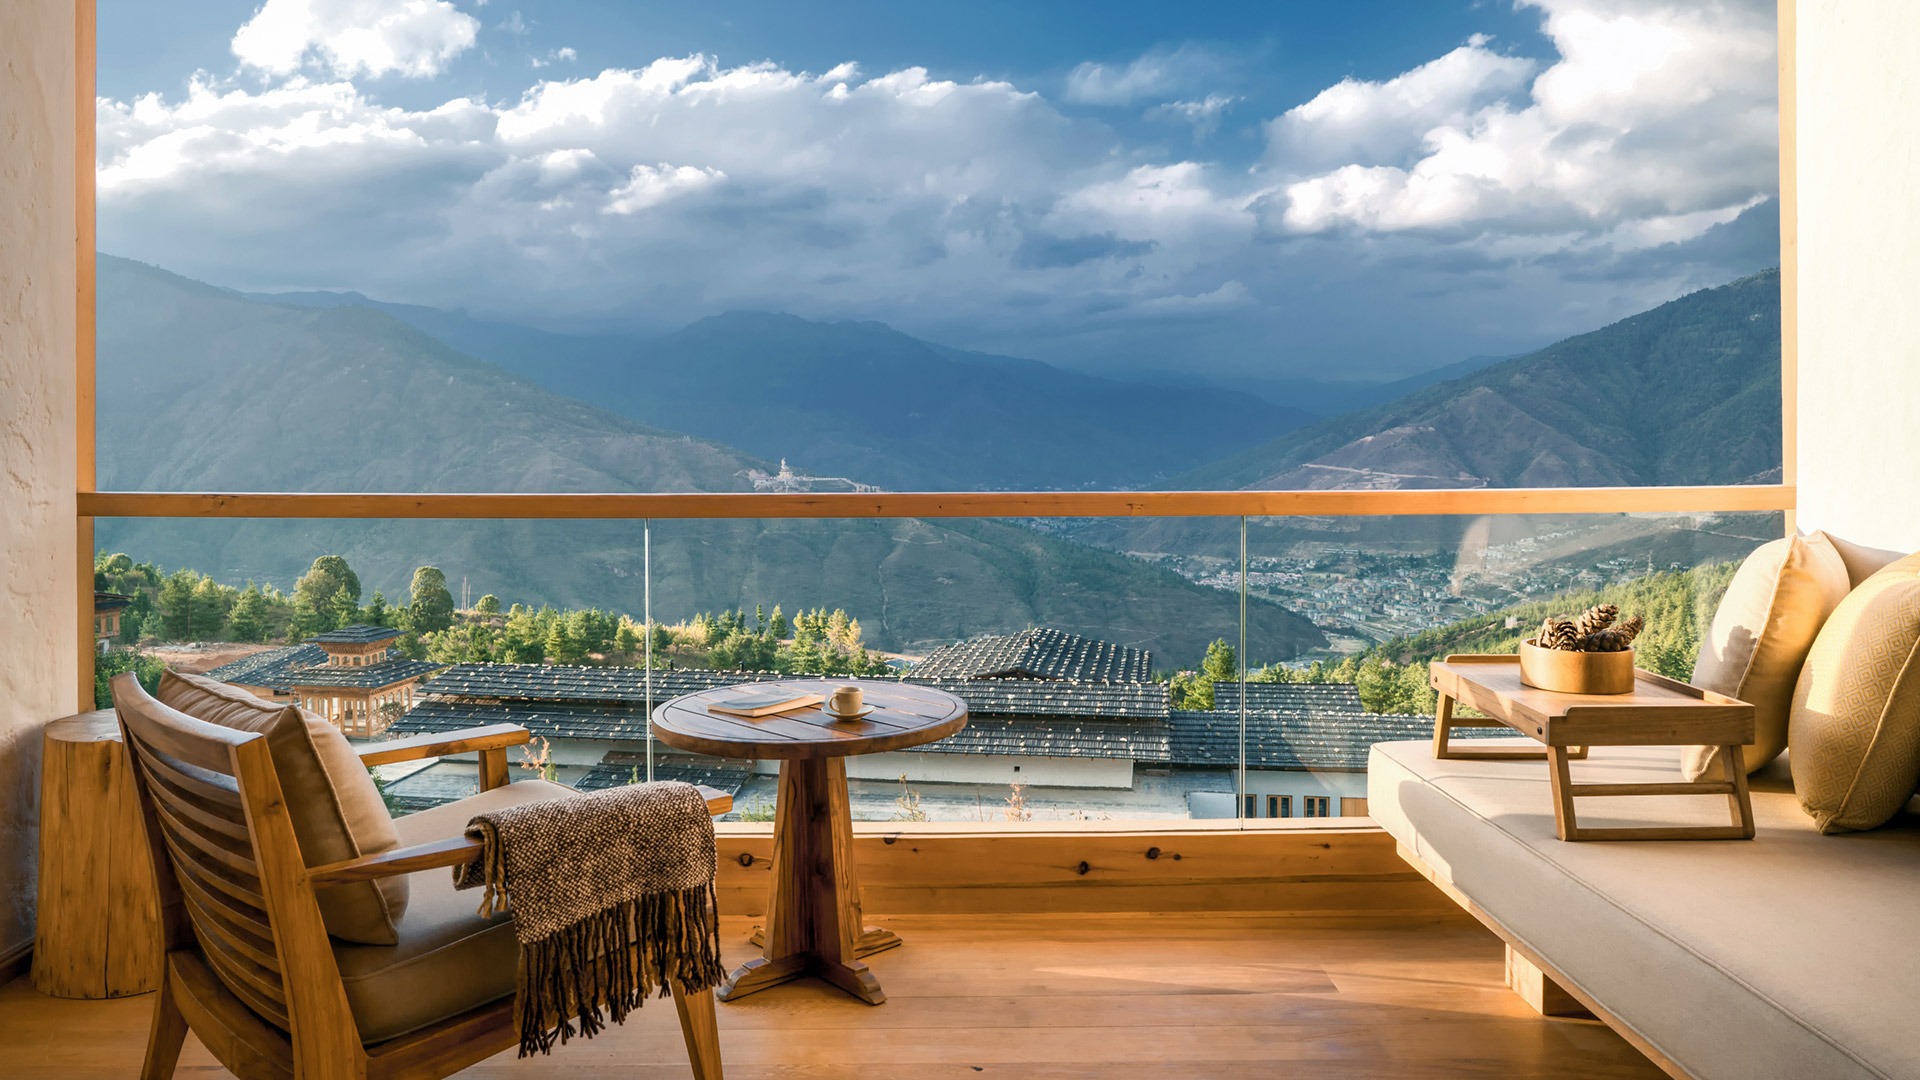 Balcony at Six Senses Lodge in Thimphu, Bhutan